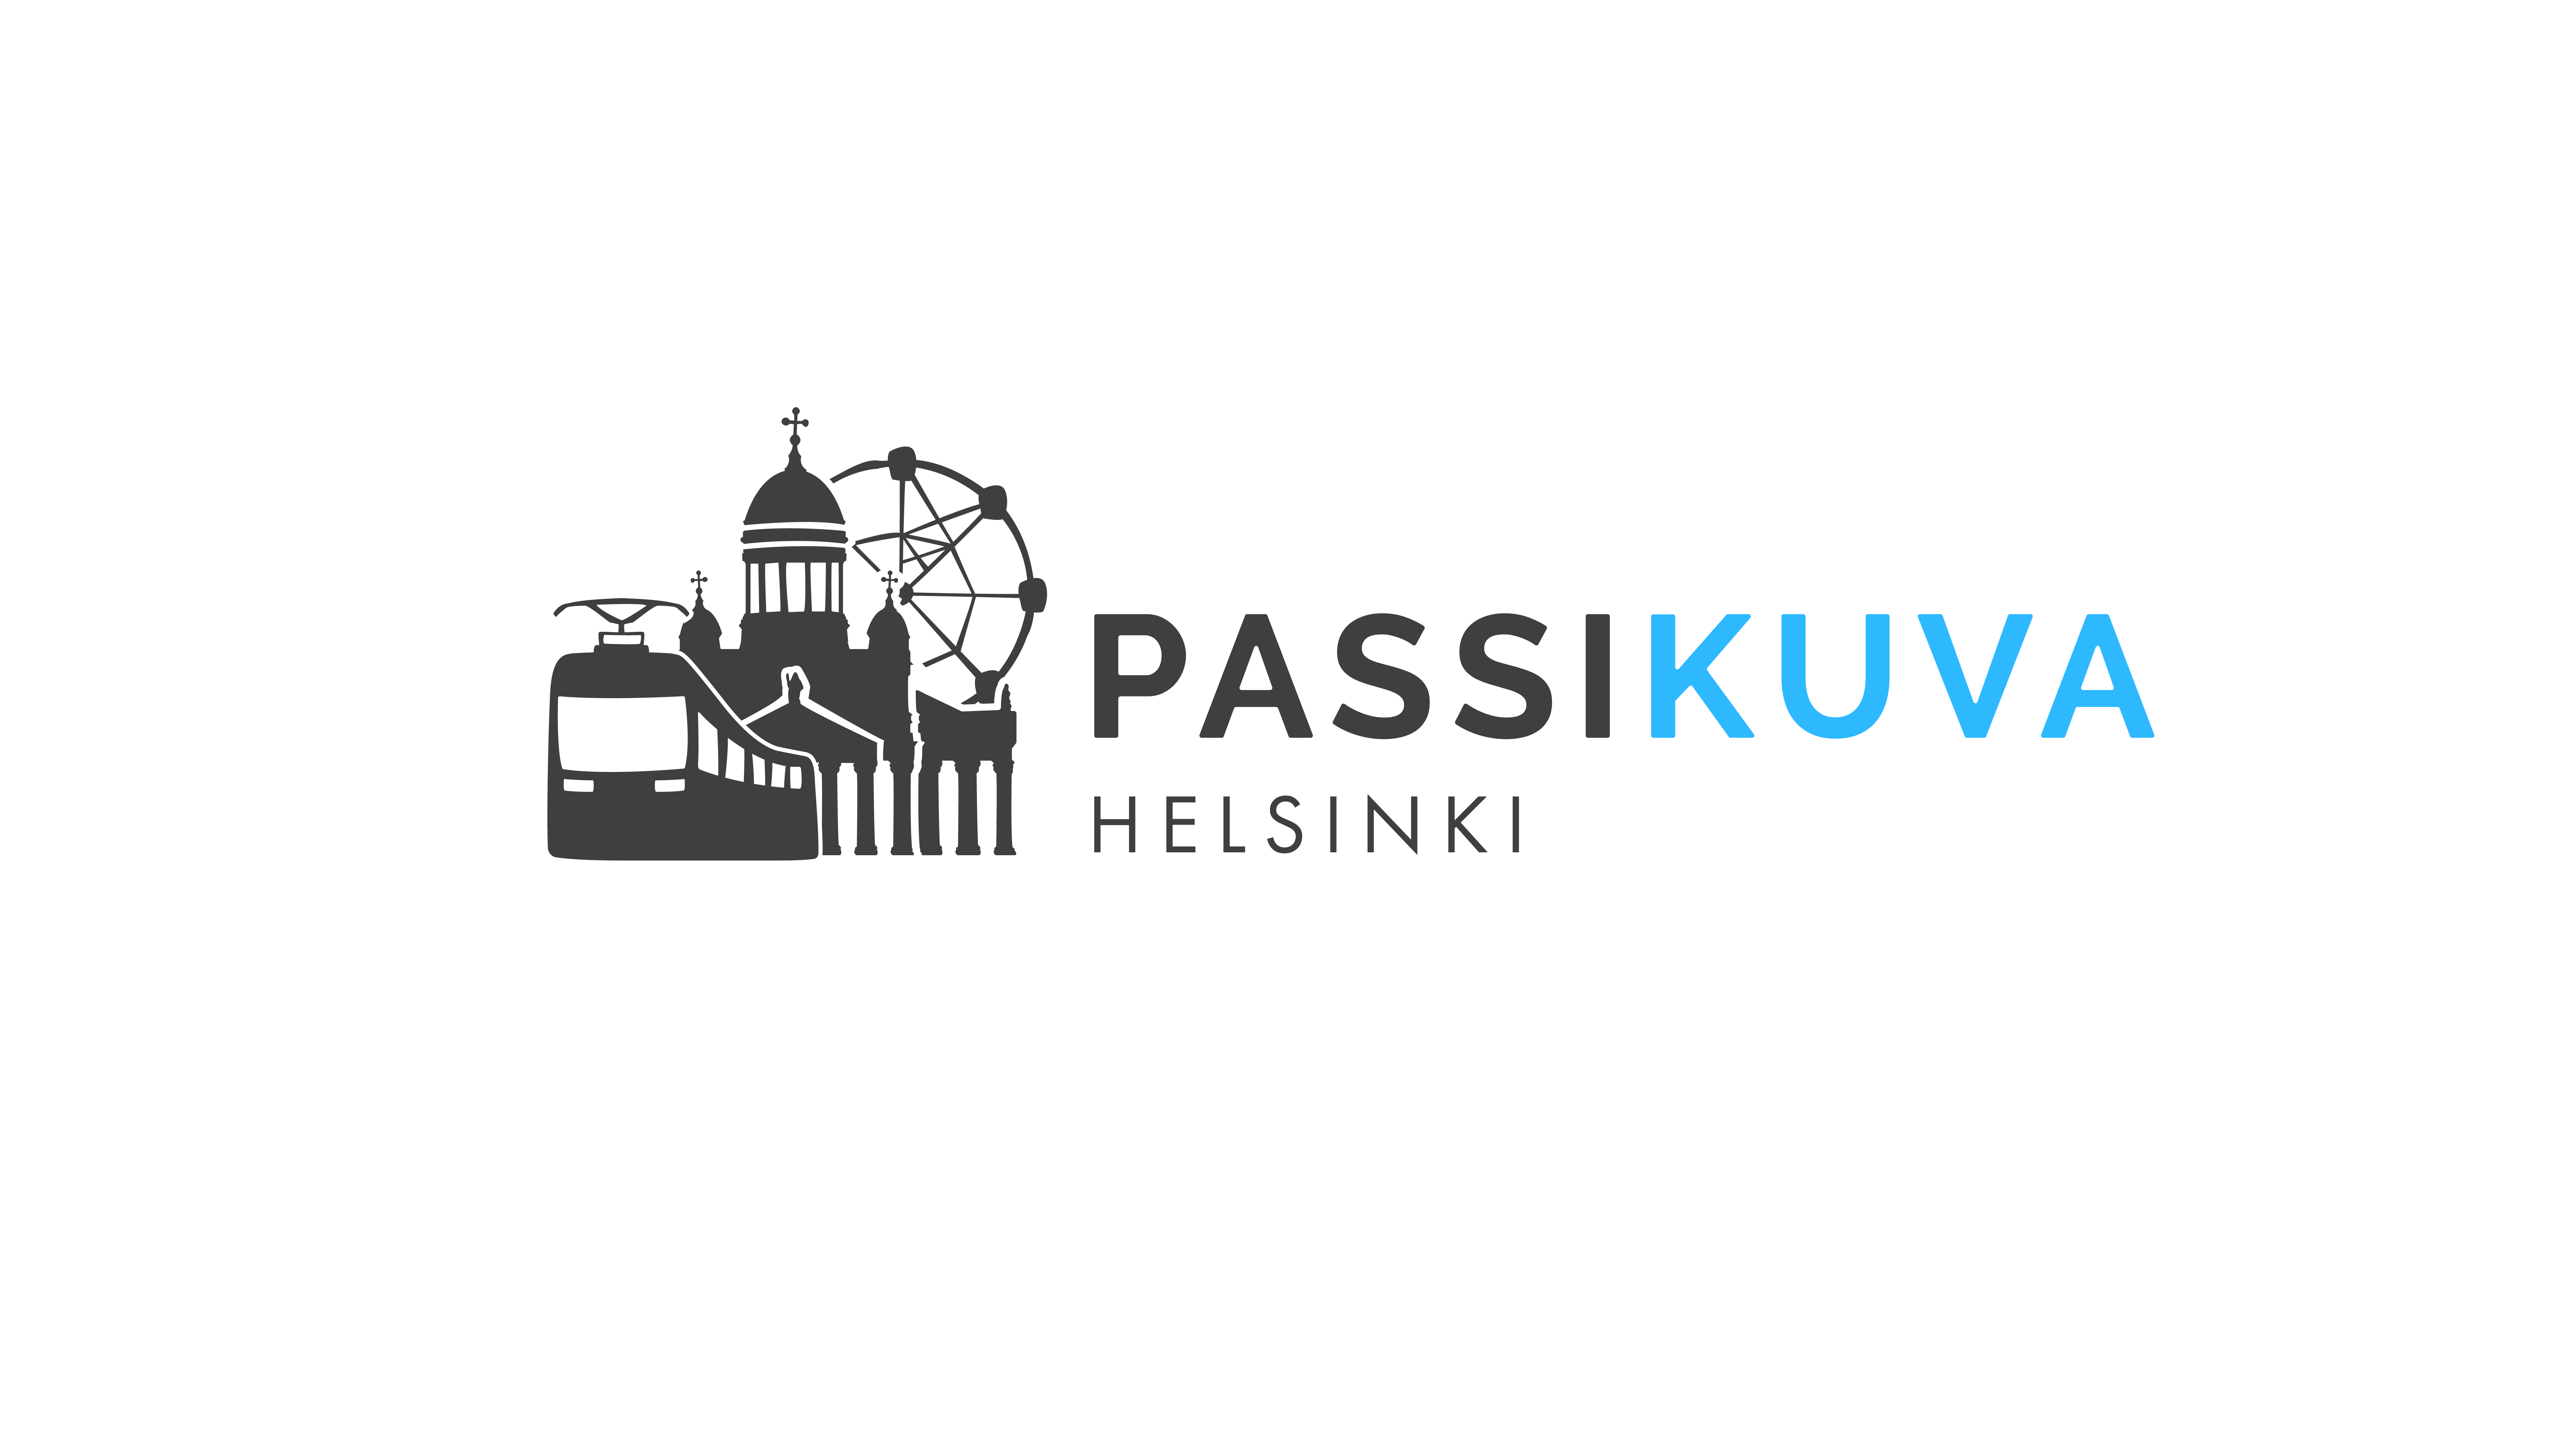 Passikuva Helsinki logo